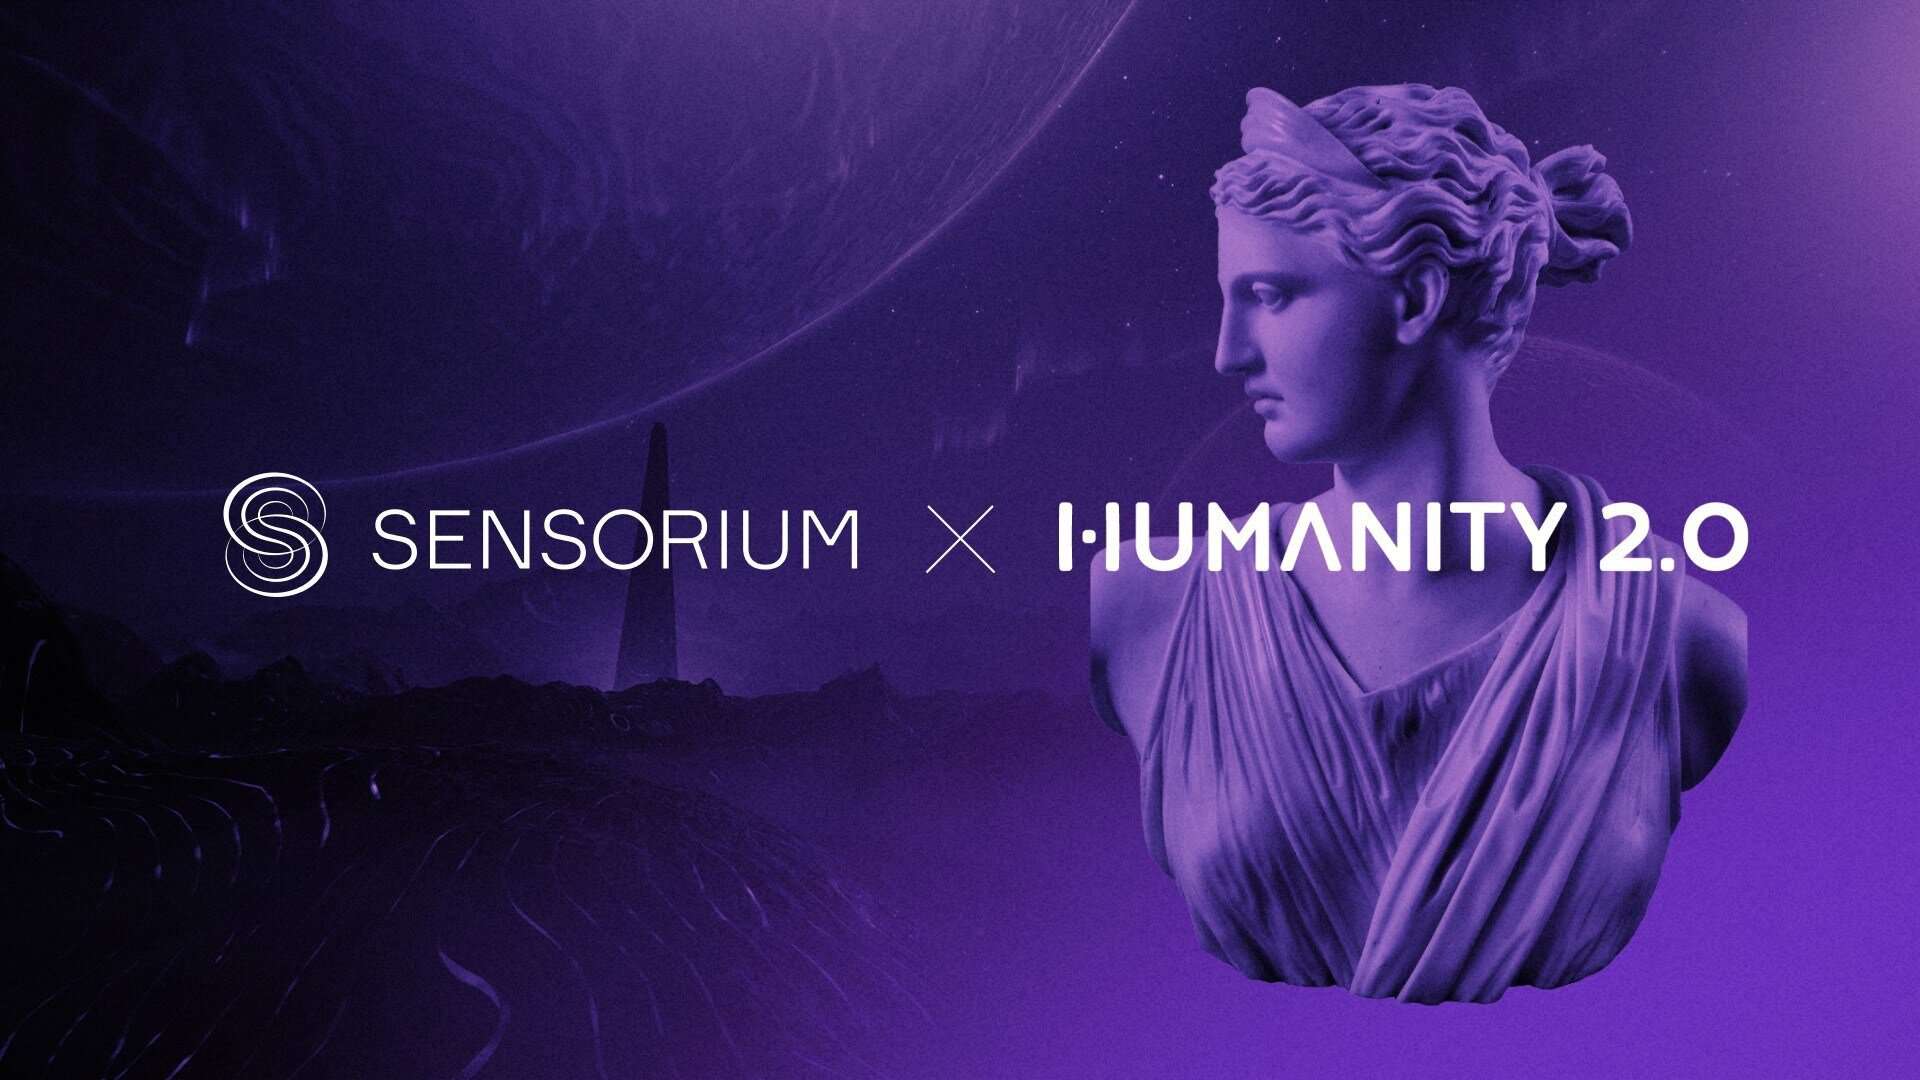 Vatican NFT gallery. Sensorium and Humanity 2.0